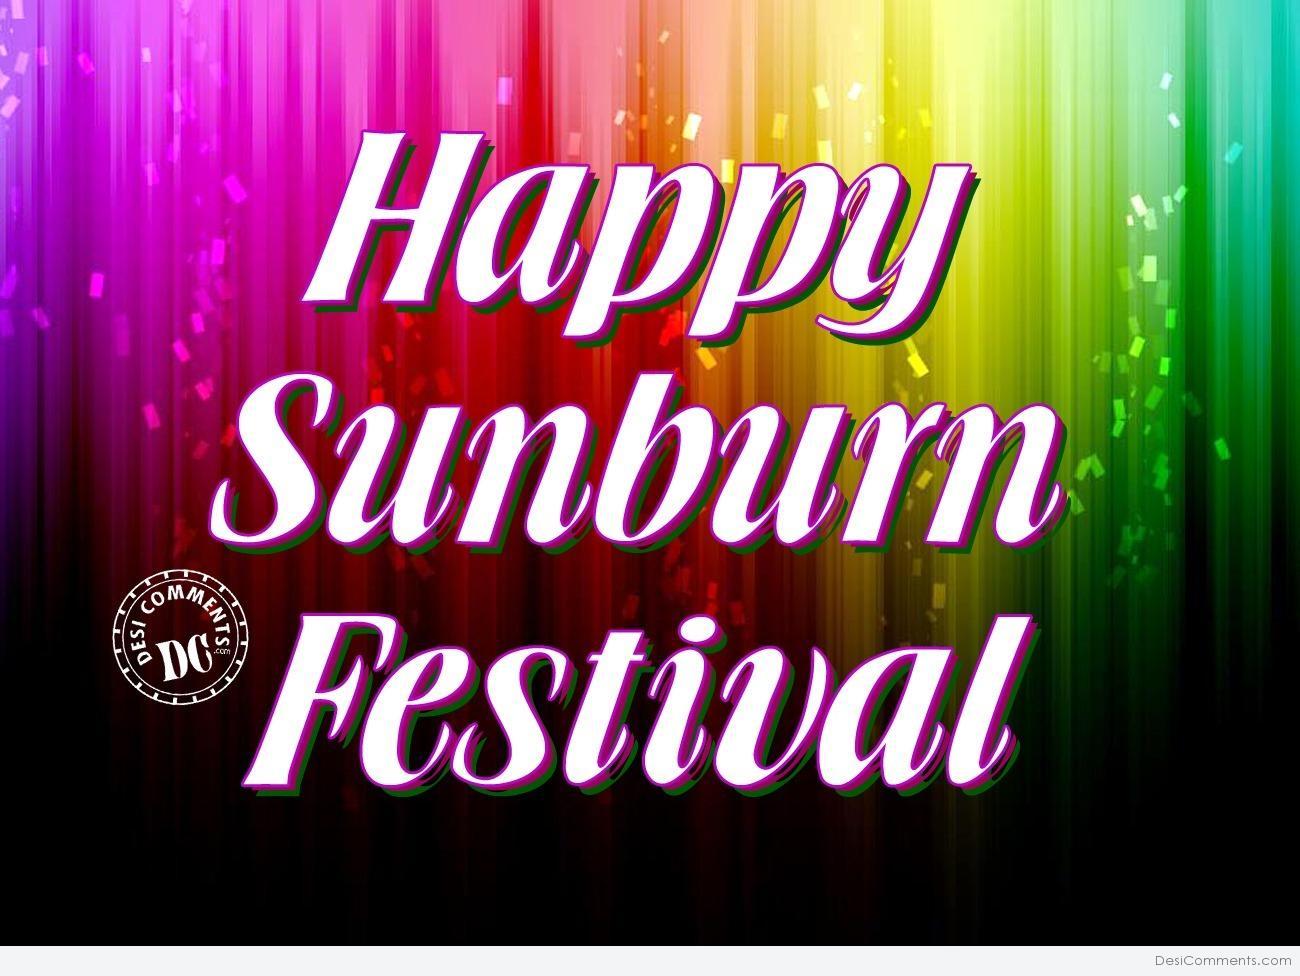 Sunburn Festival Picture and Image